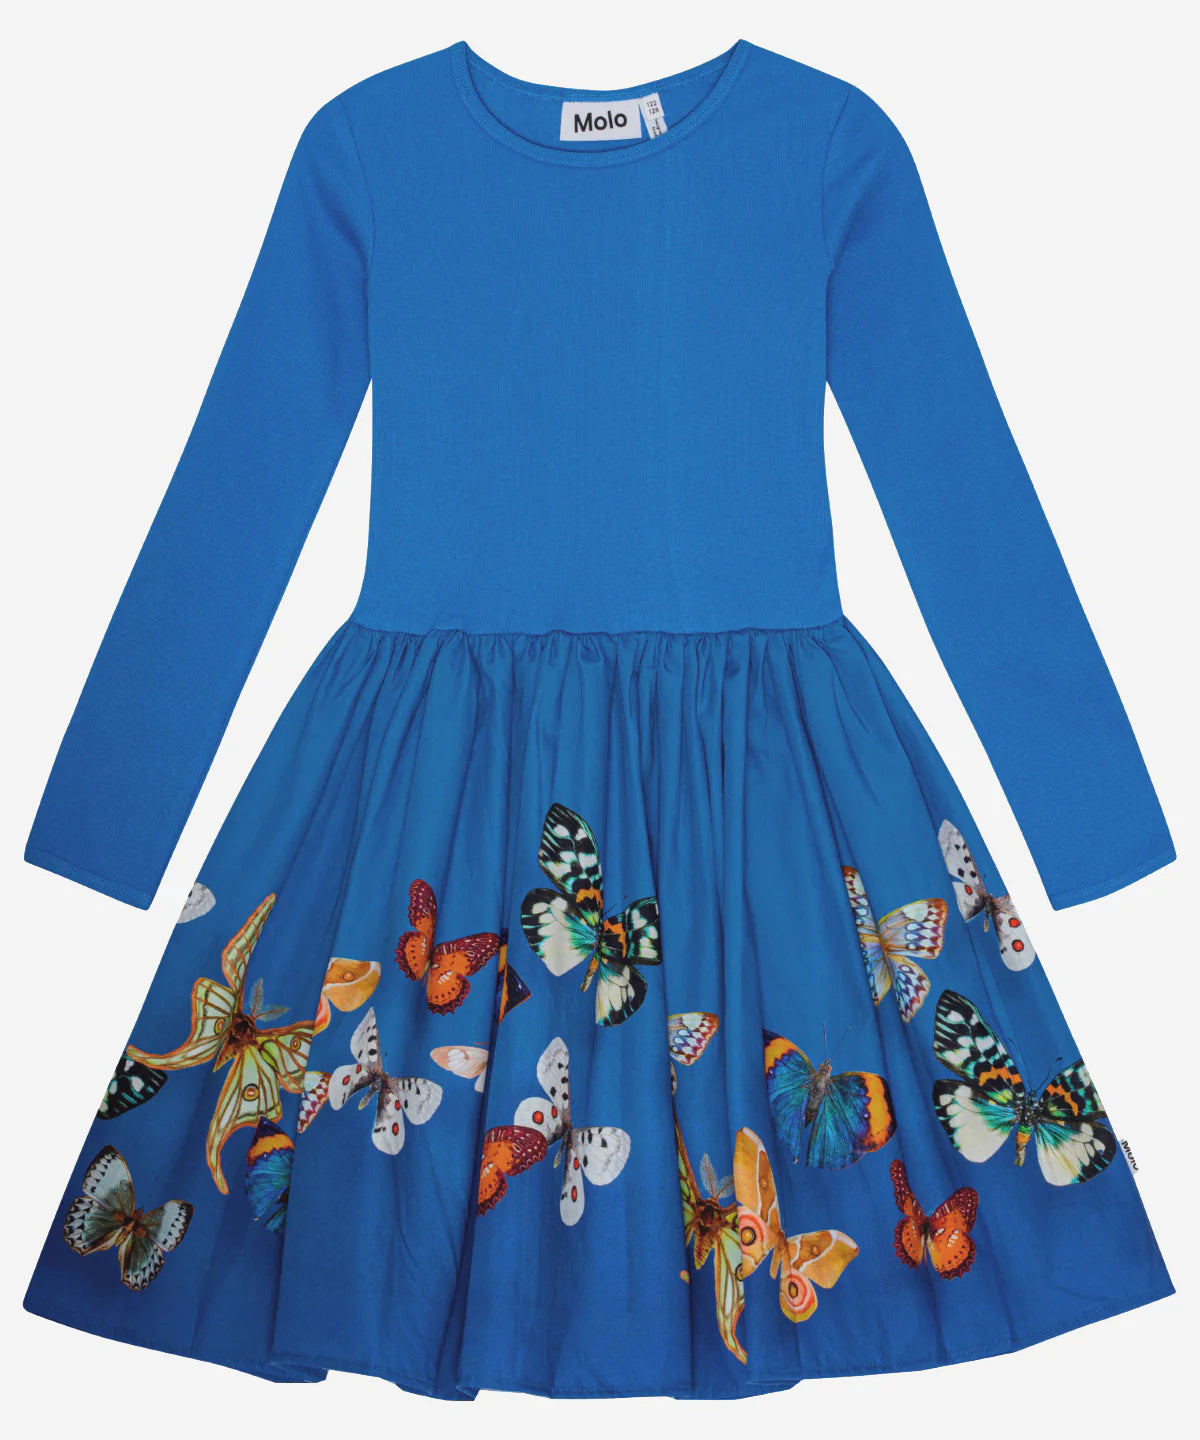 Molo Casie Night Butterflies dress